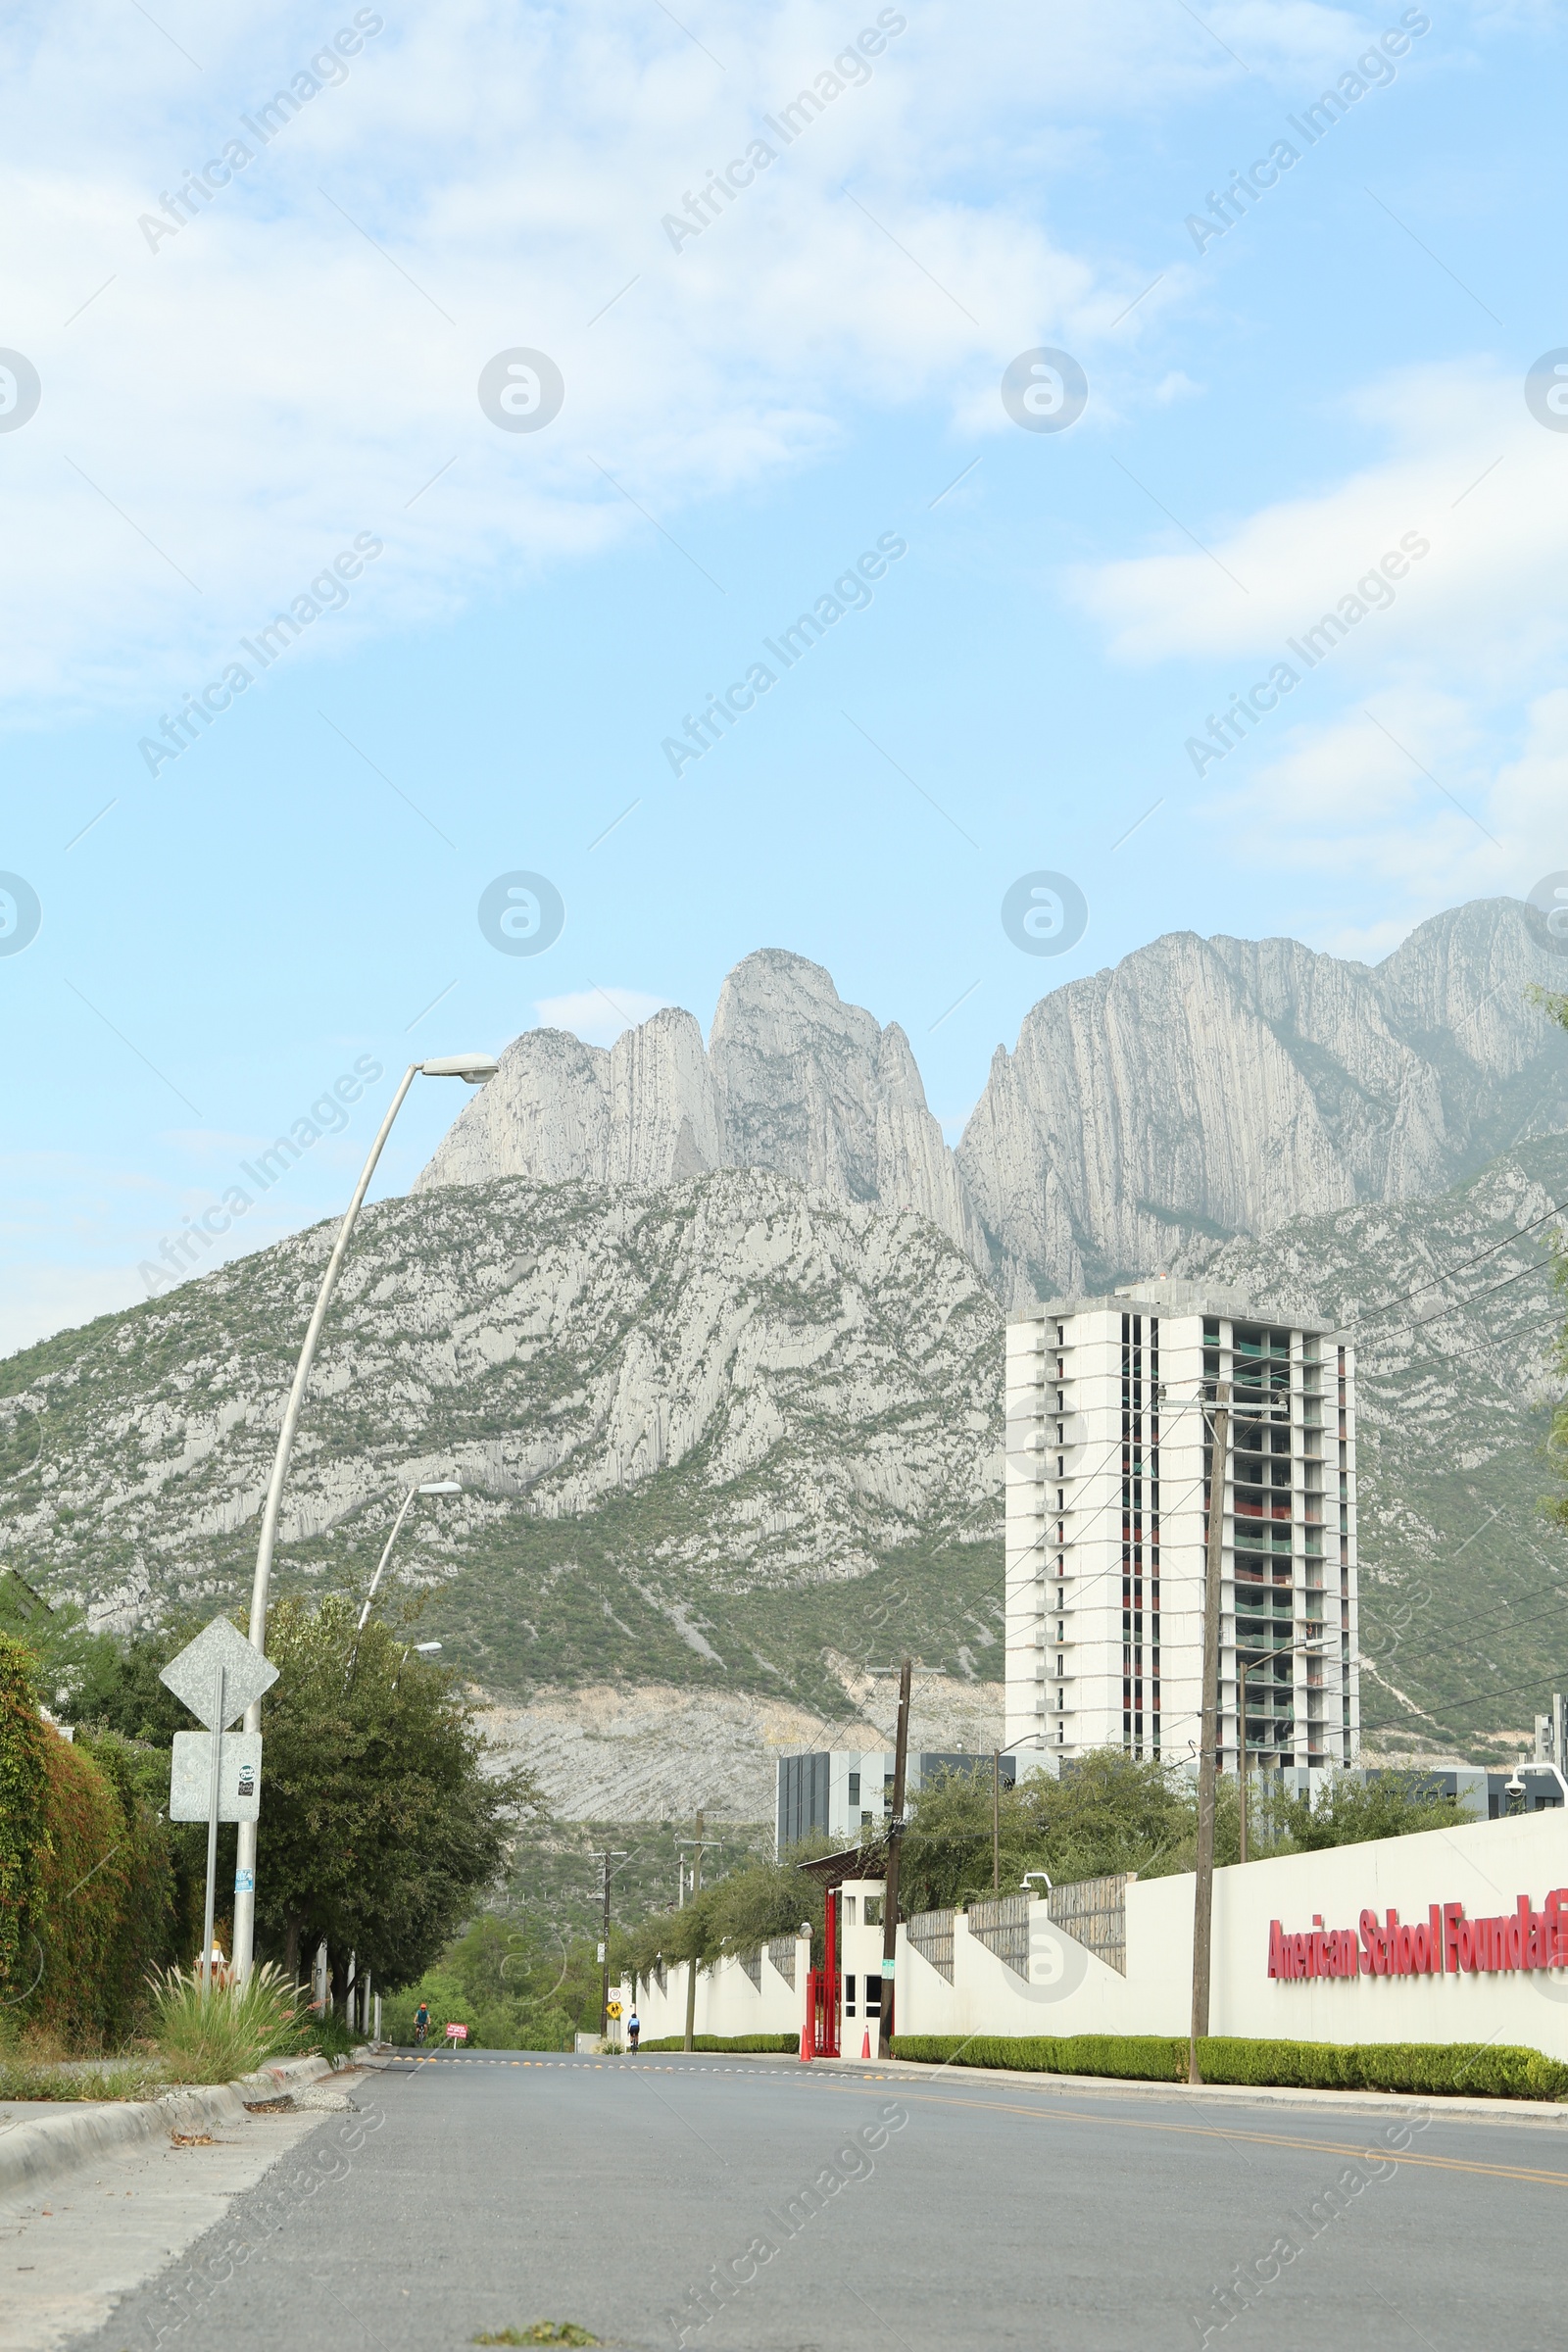 Photo of Mexico, San Pedro Garza Garcia - August 27, 2022: City street near beautiful mountains